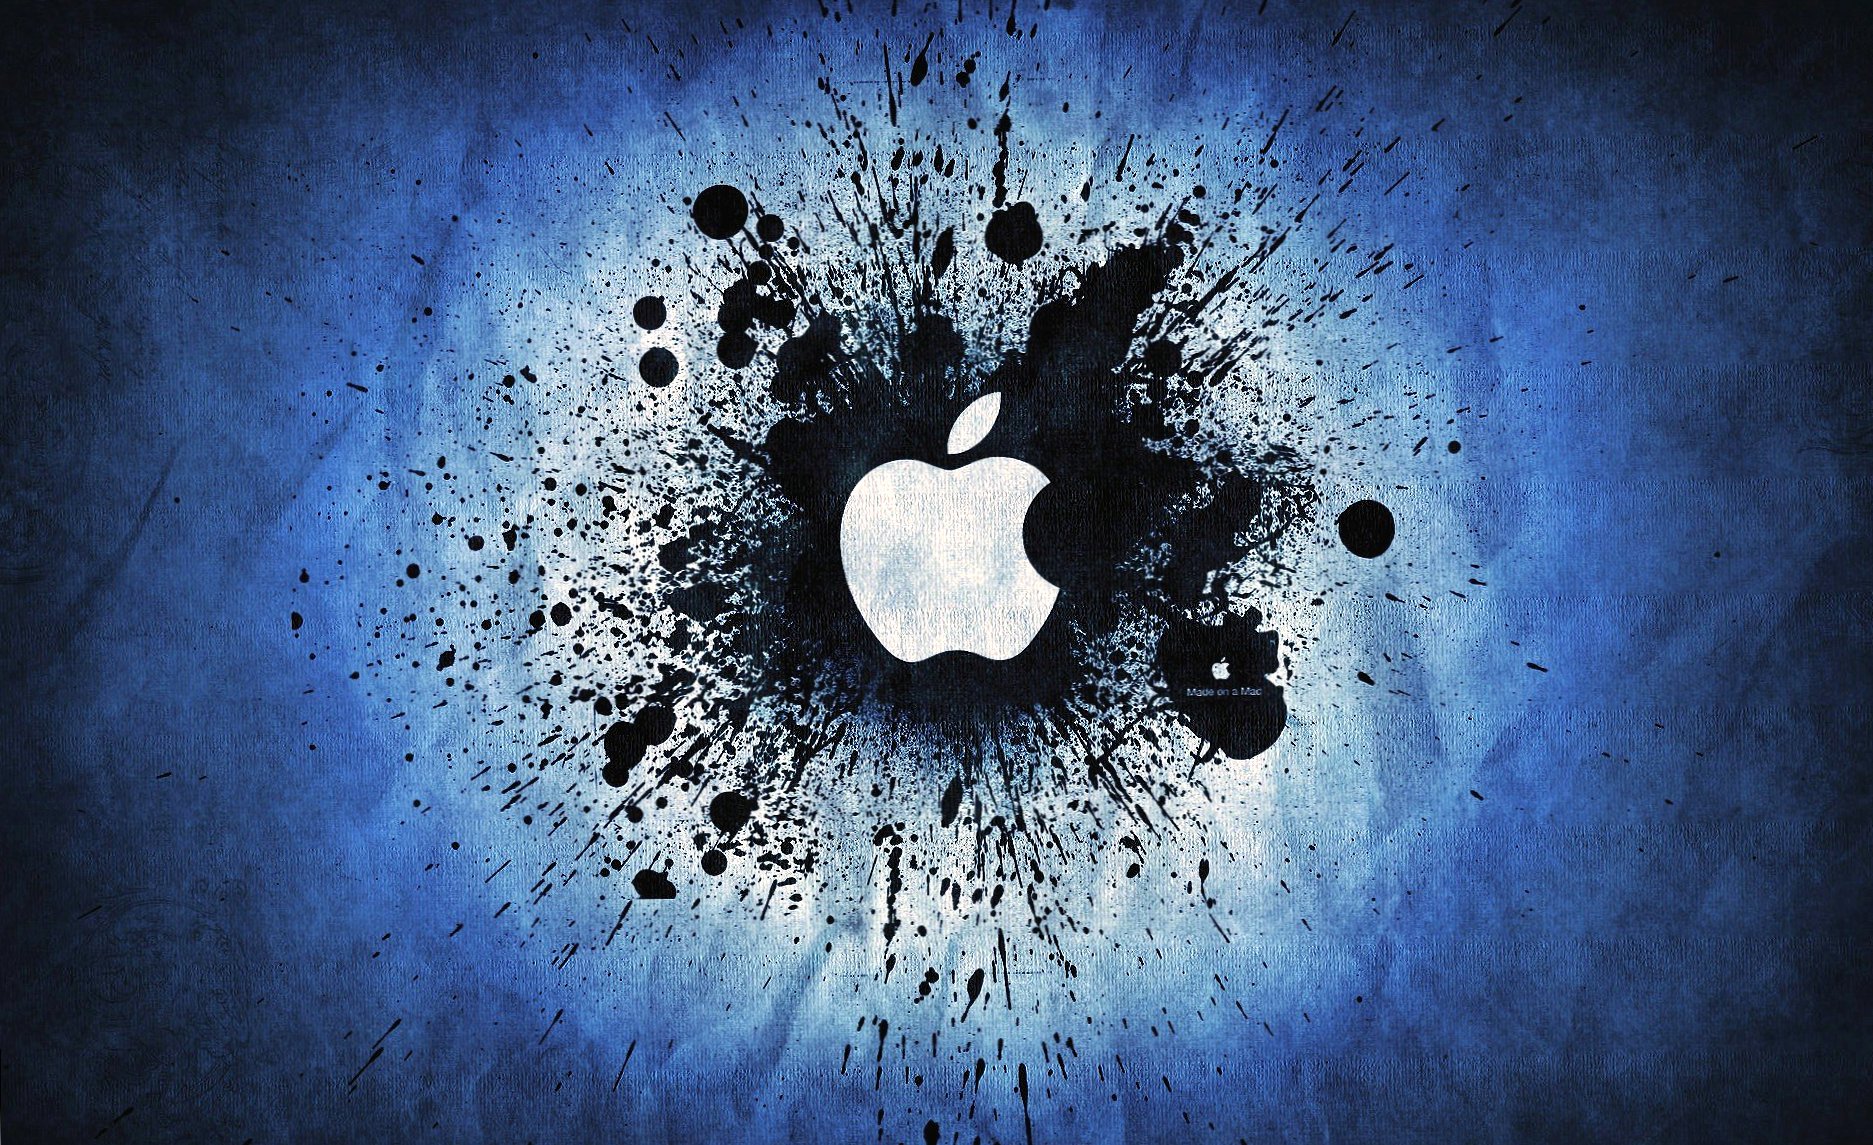 Black spot apple at 2048 x 2048 iPad size wallpapers HD quality